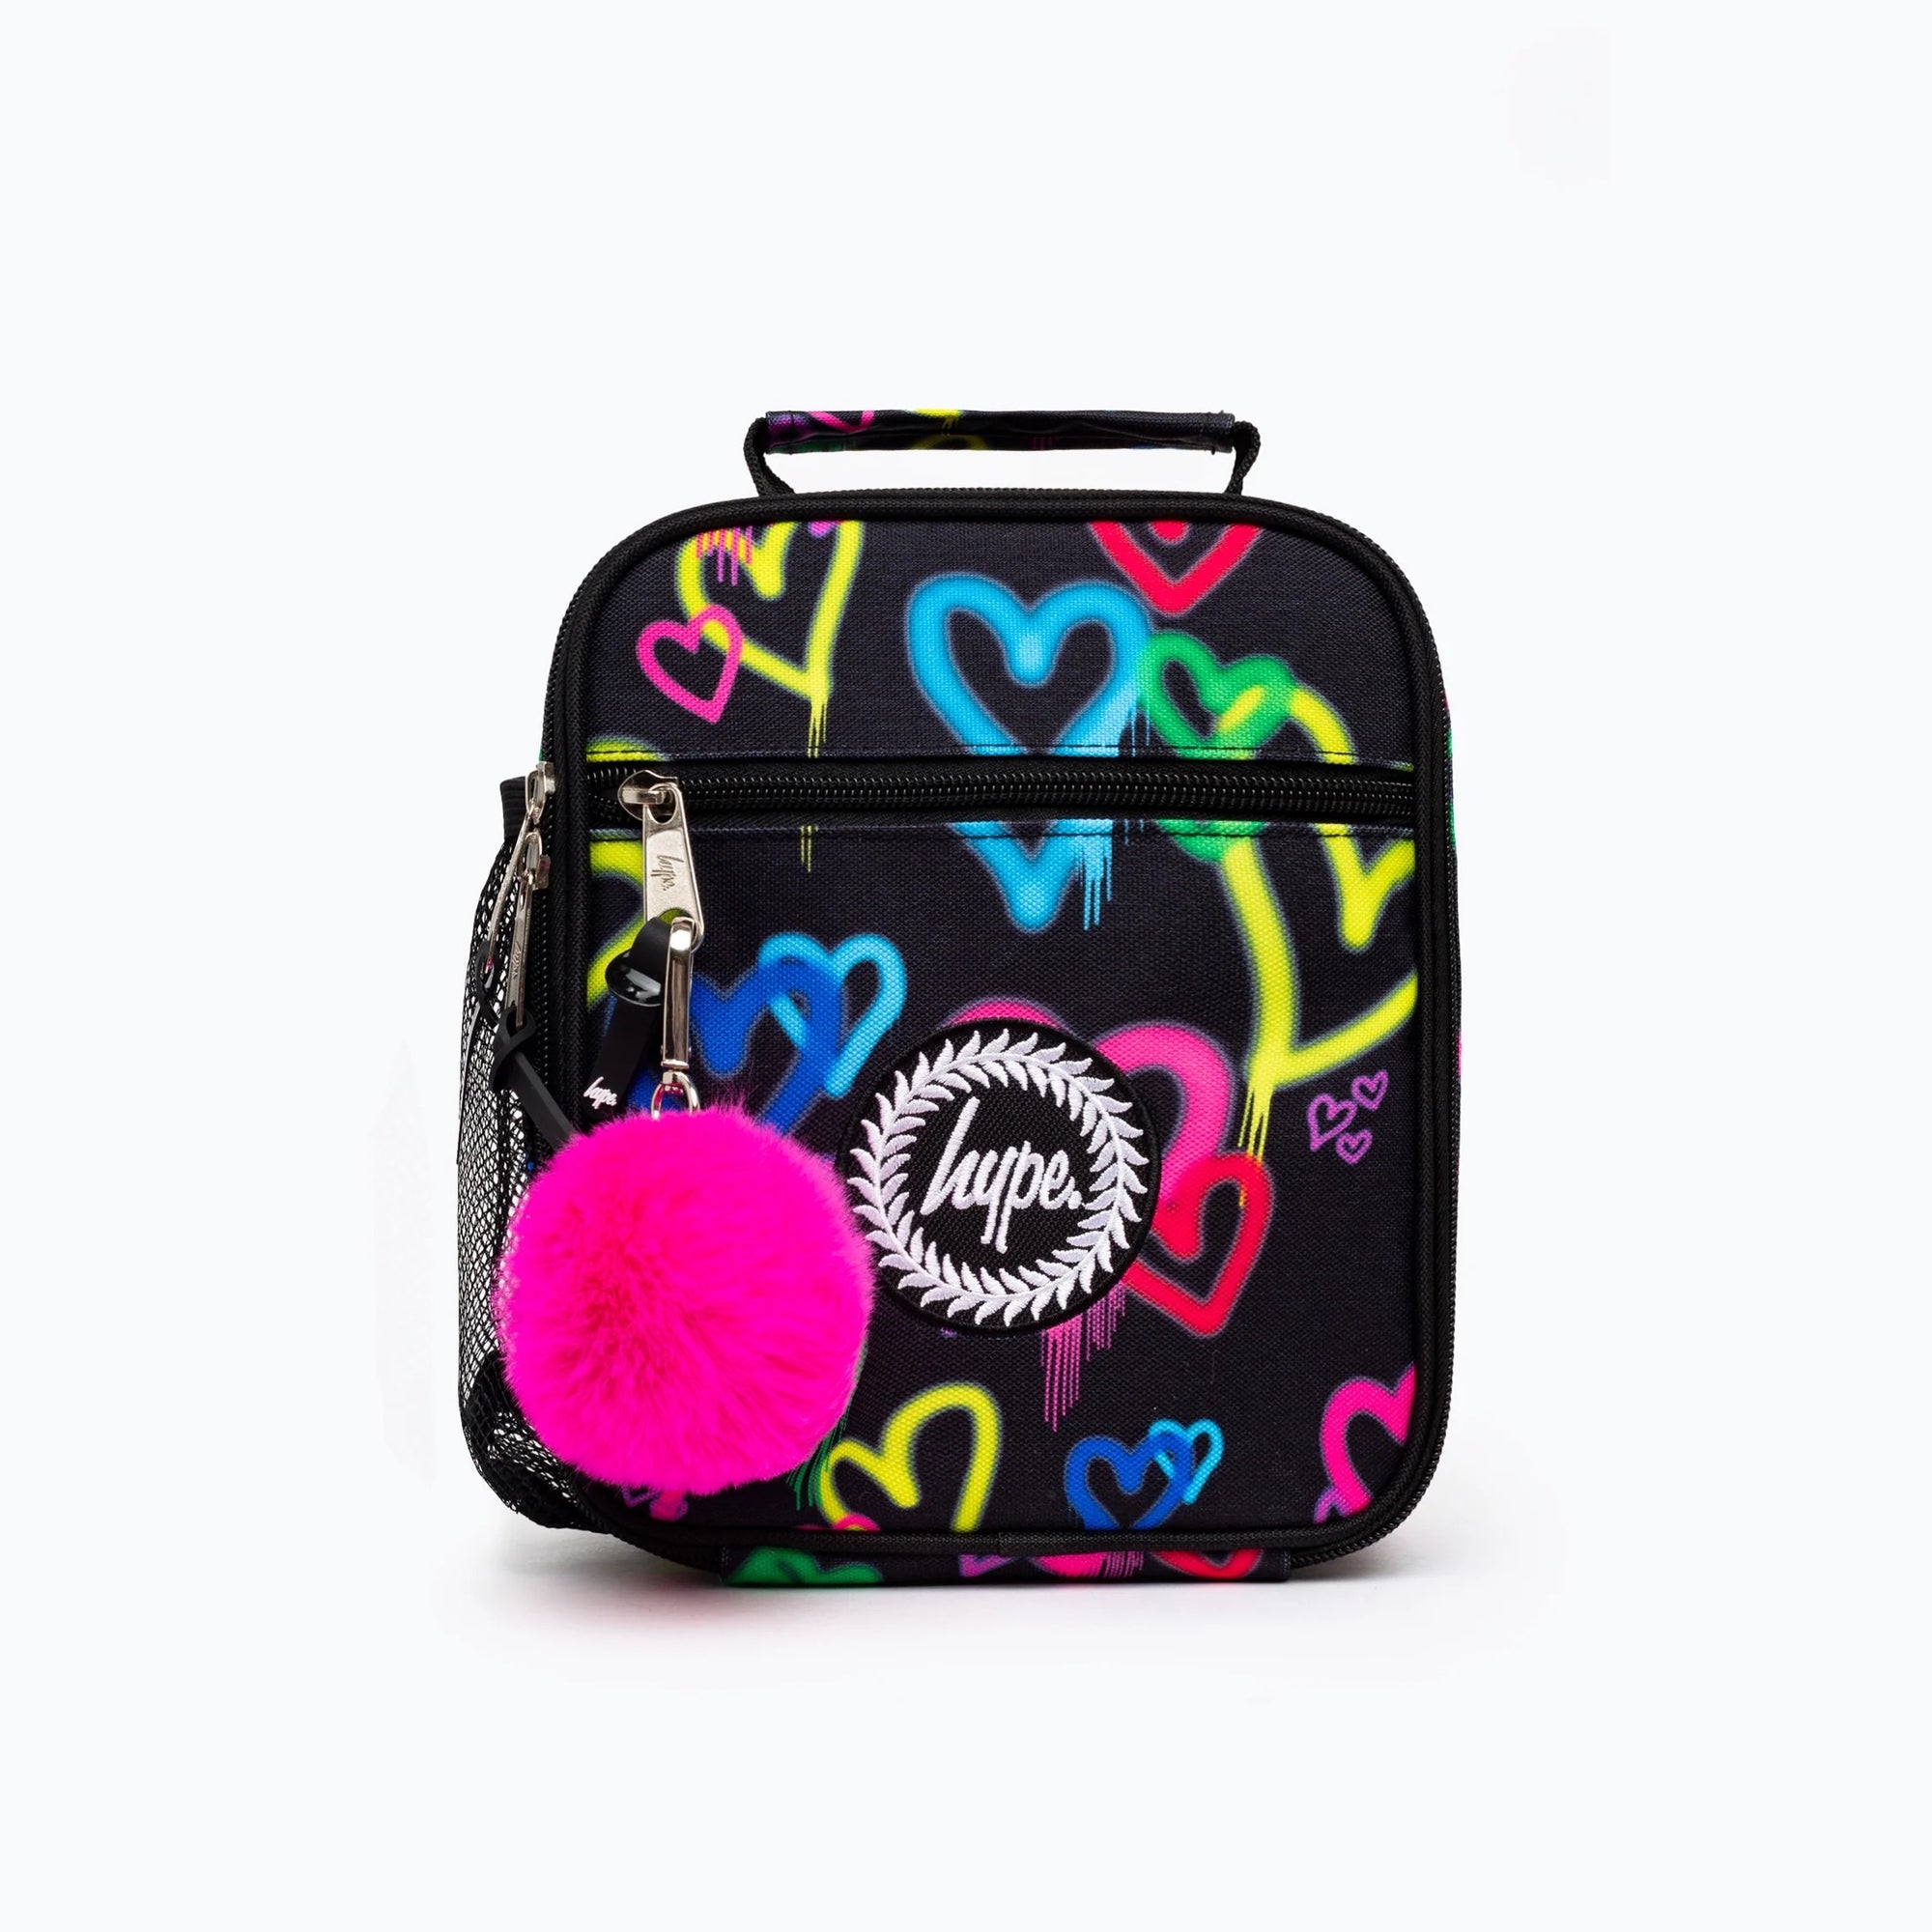 Hype Graffiti Heart Lunchbag Twcb-2417 Accessories ONE SIZE / Multi